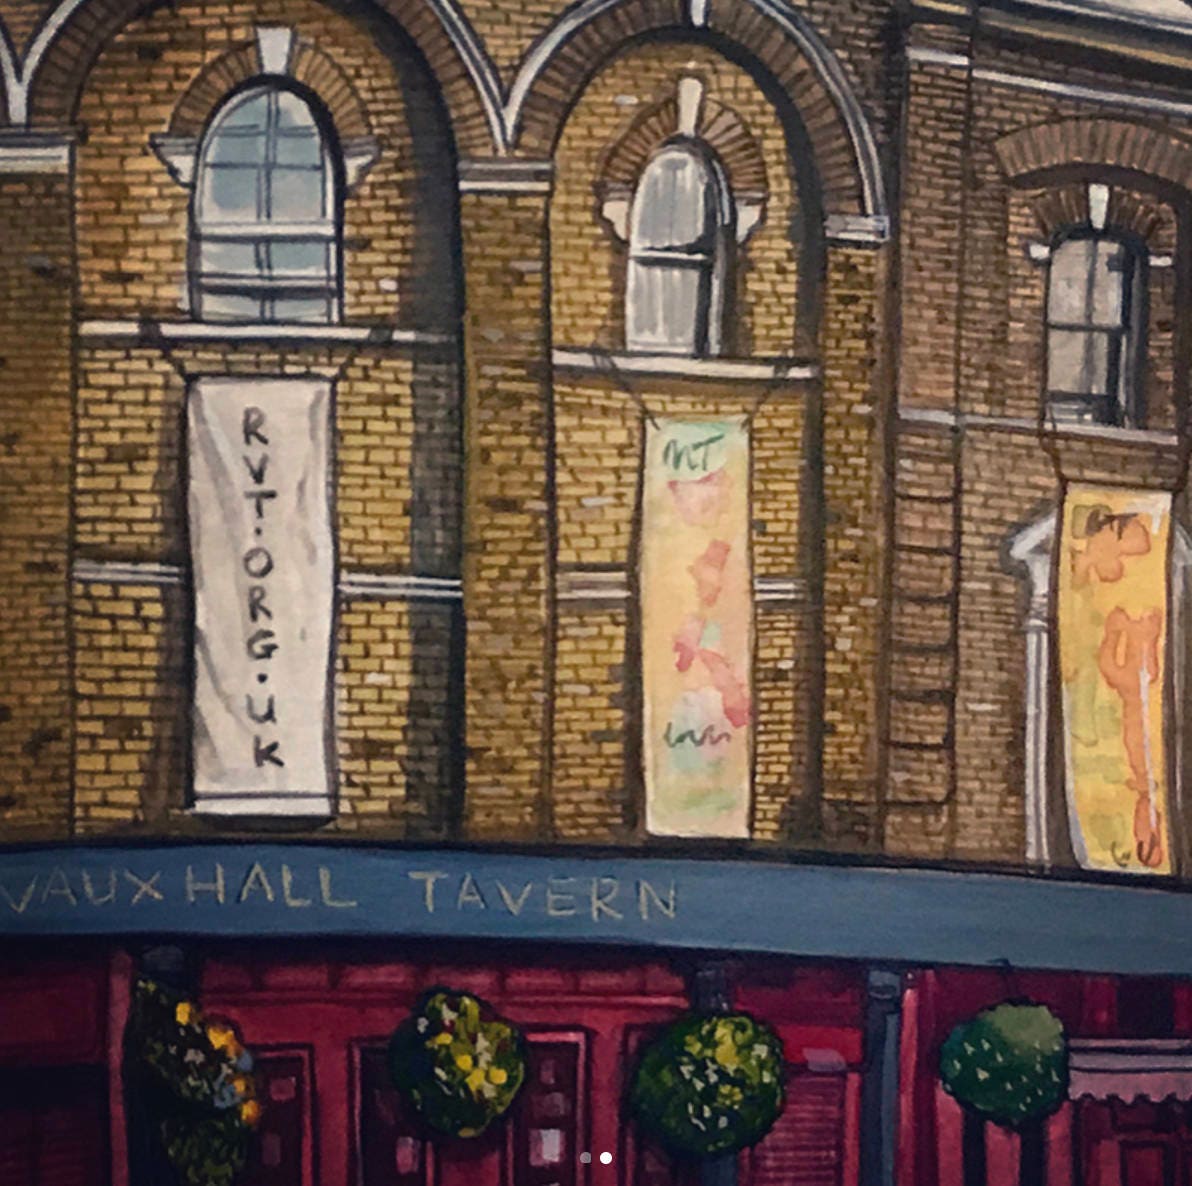 The Royal Vauxhall Tavern Art Print, Vauxhall, London